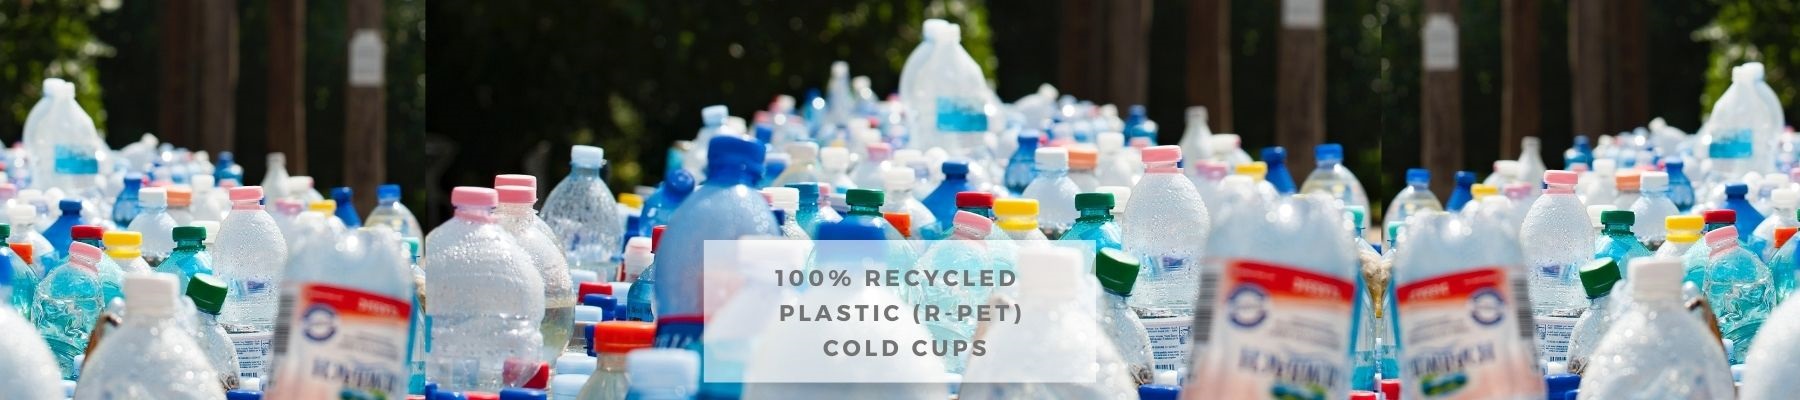 100% Recycled Plastic Glasses - PET (r-Pet) Cold Plastic Cups II